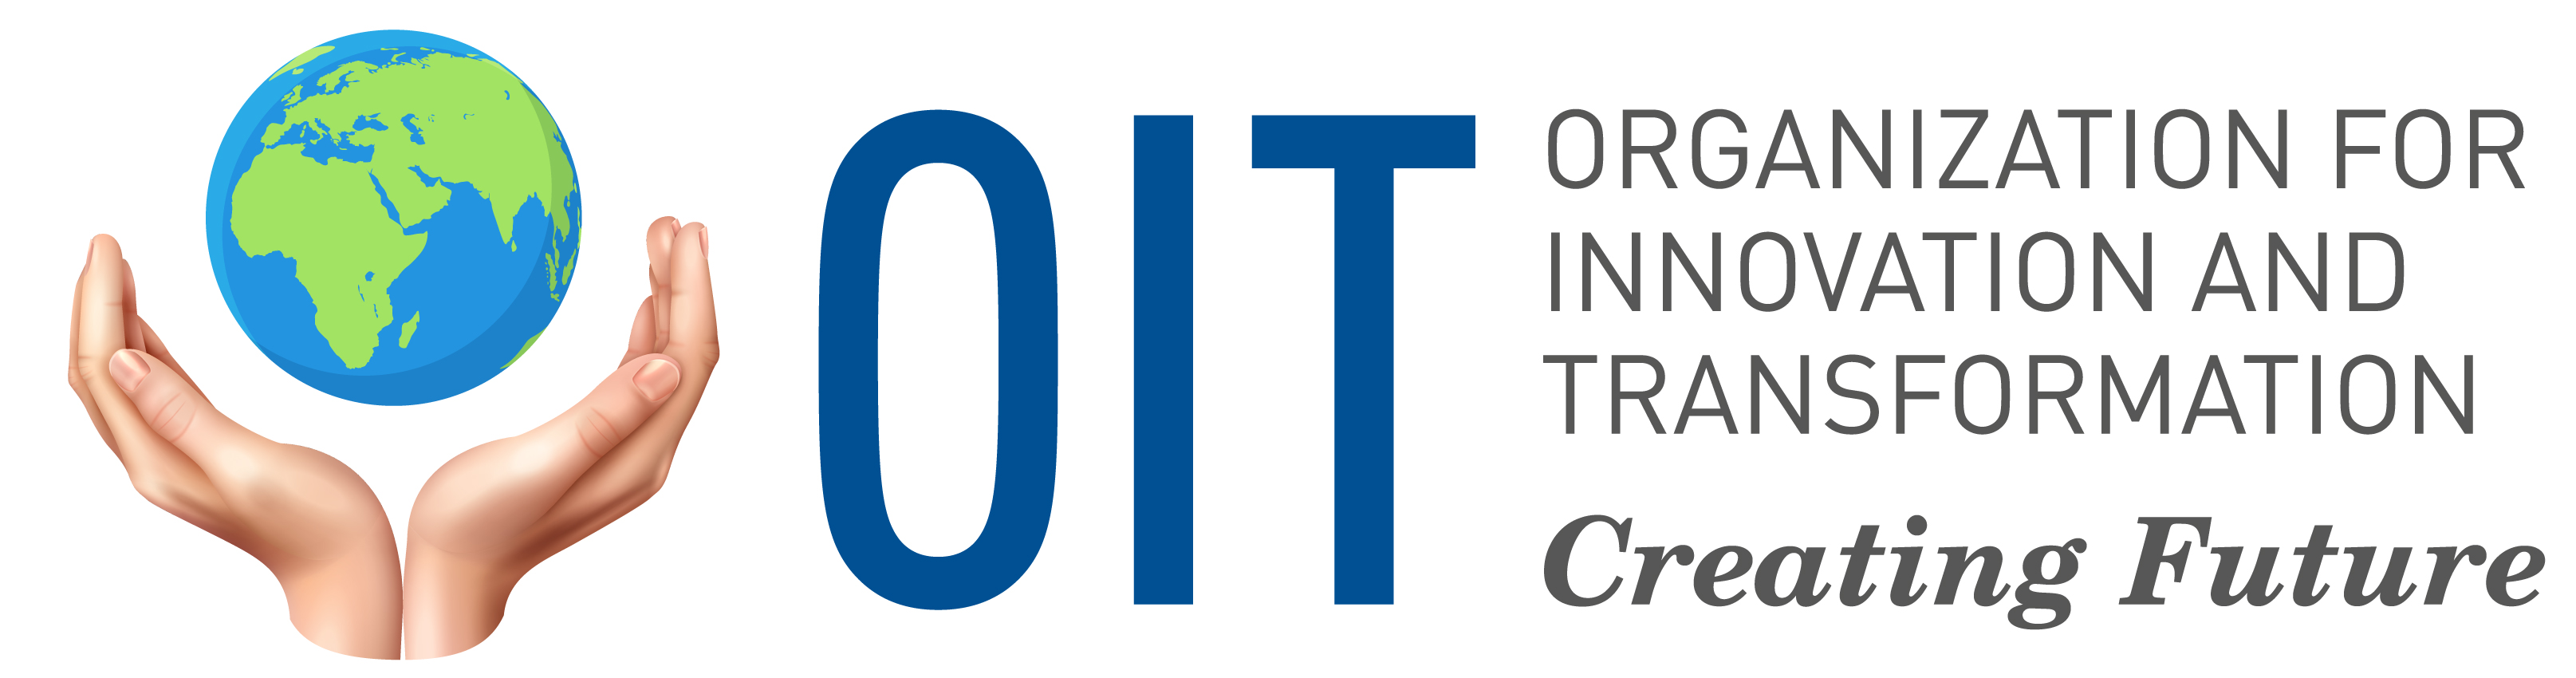 oit.org.in